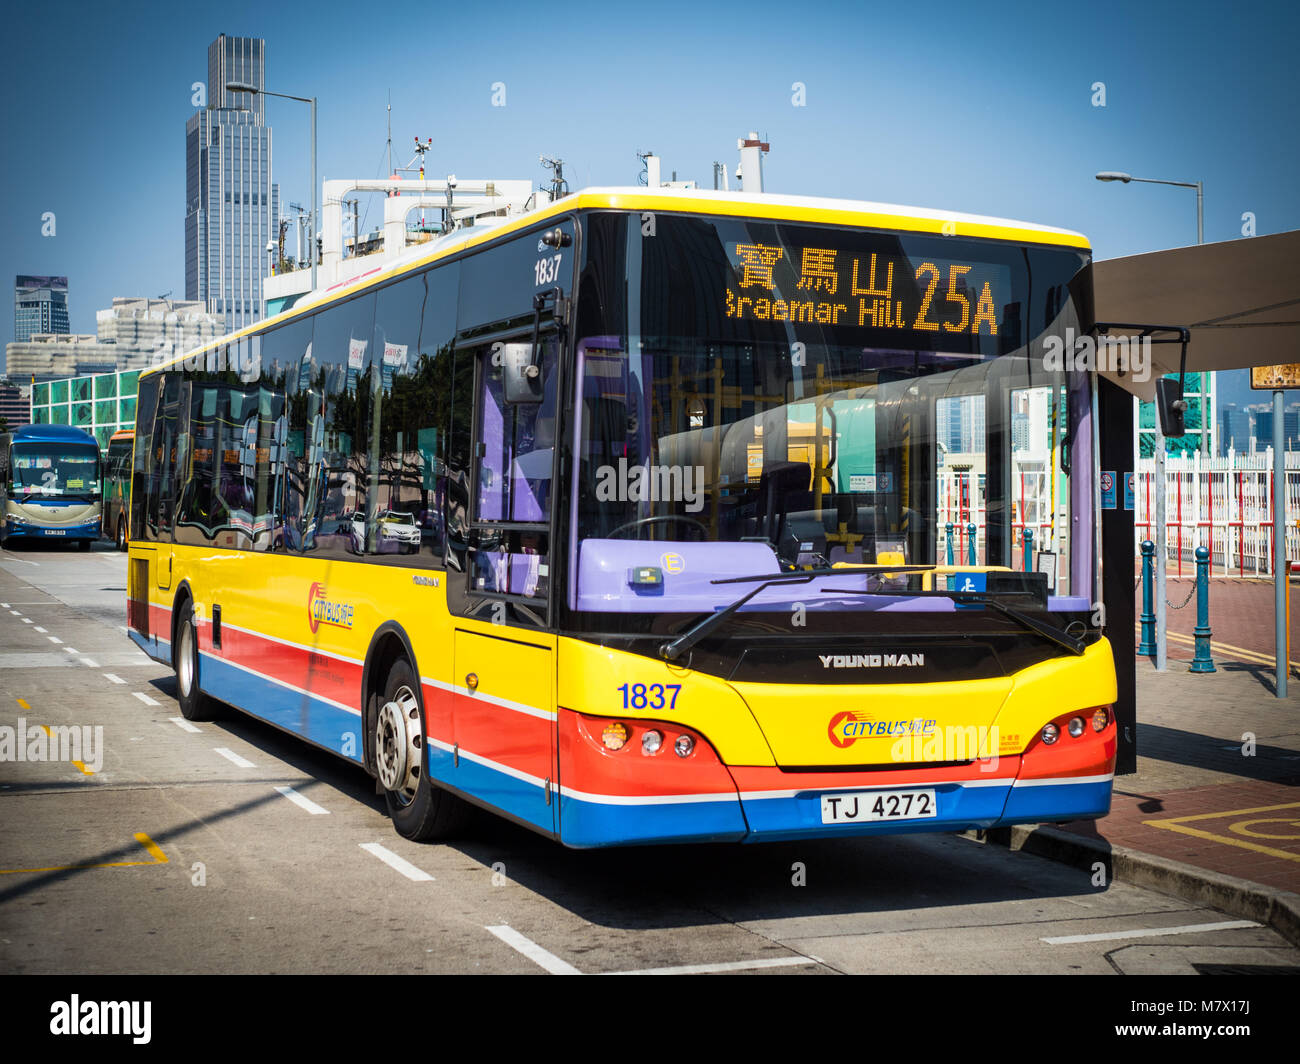 Citybus Hong Kong - Youngman single decker bus at the Star Ferry Bus terminus in Hong Kong Stock Photo